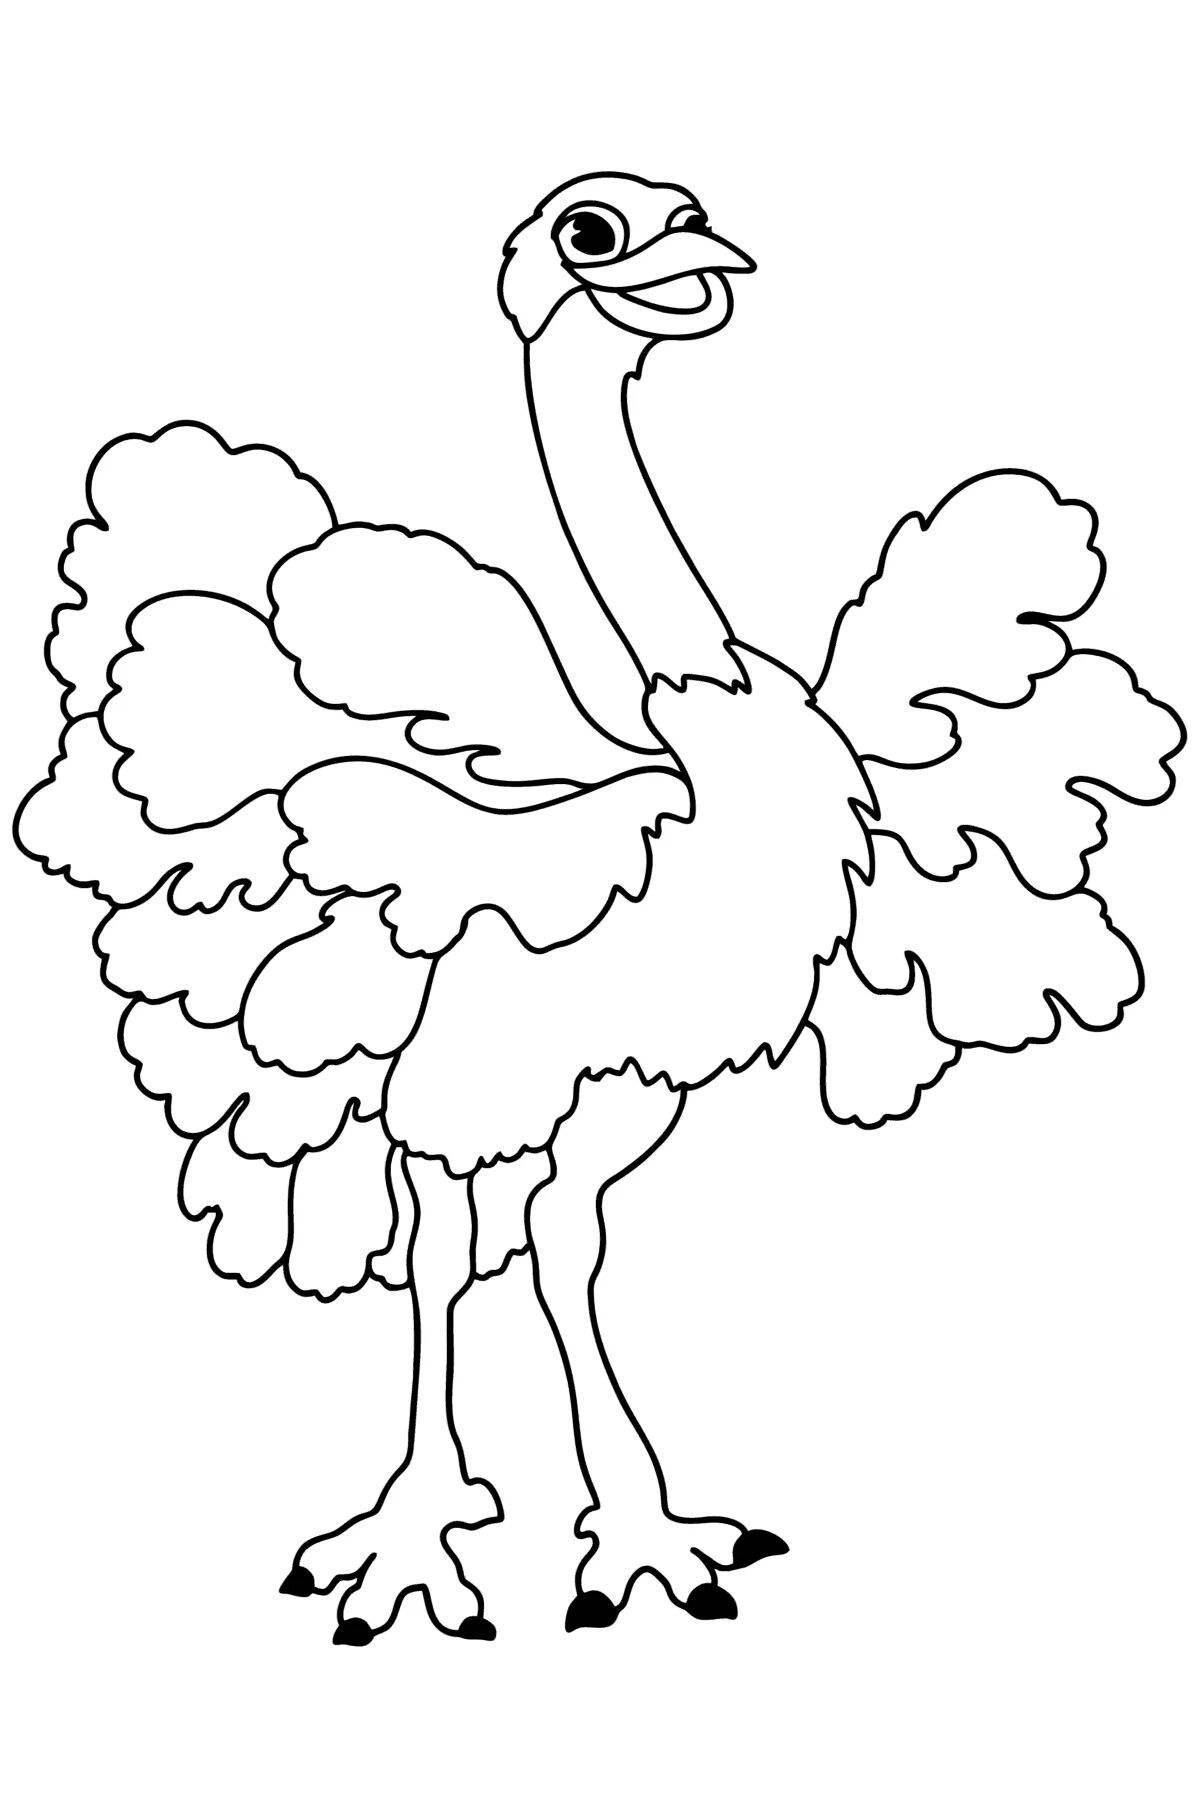 Cute emu coloring book for kids